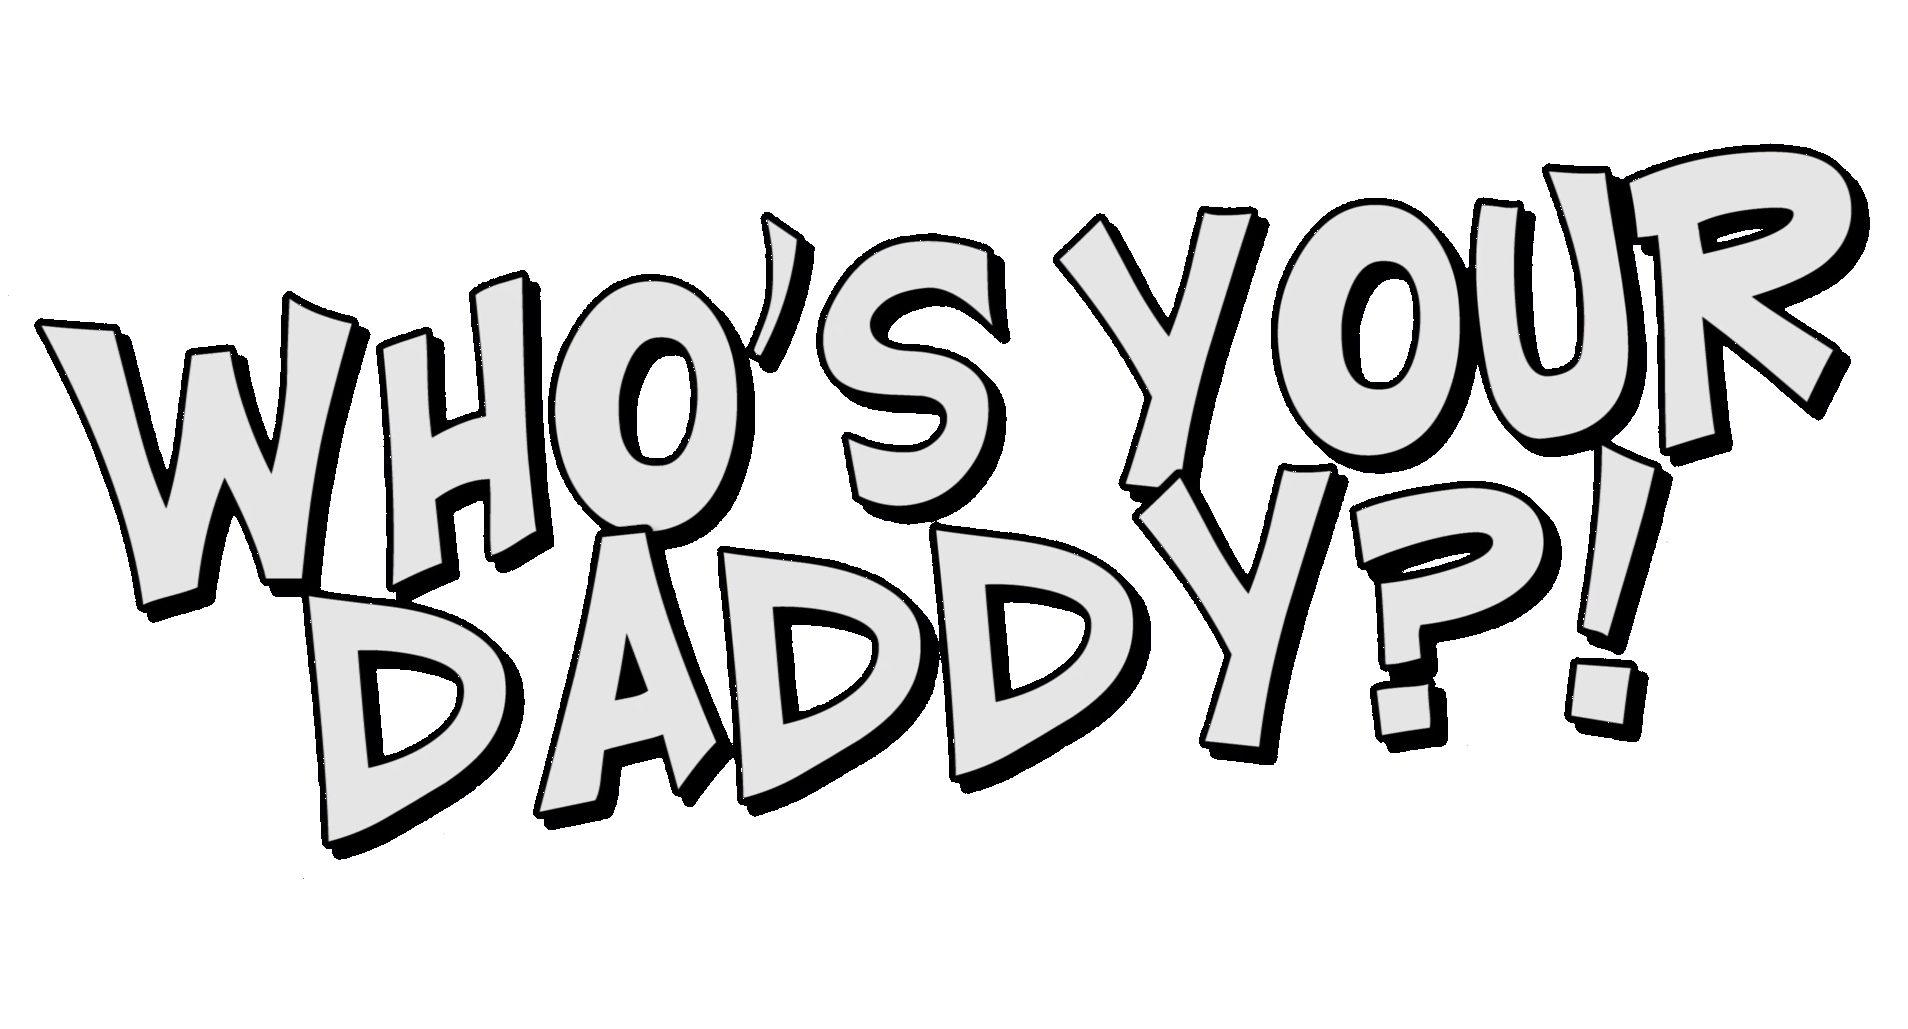 Daddy yo. Logo Daddy 01. Made by dad logo. Danny and Daddy logo PNG. Mummy and Daddy logo PNG.